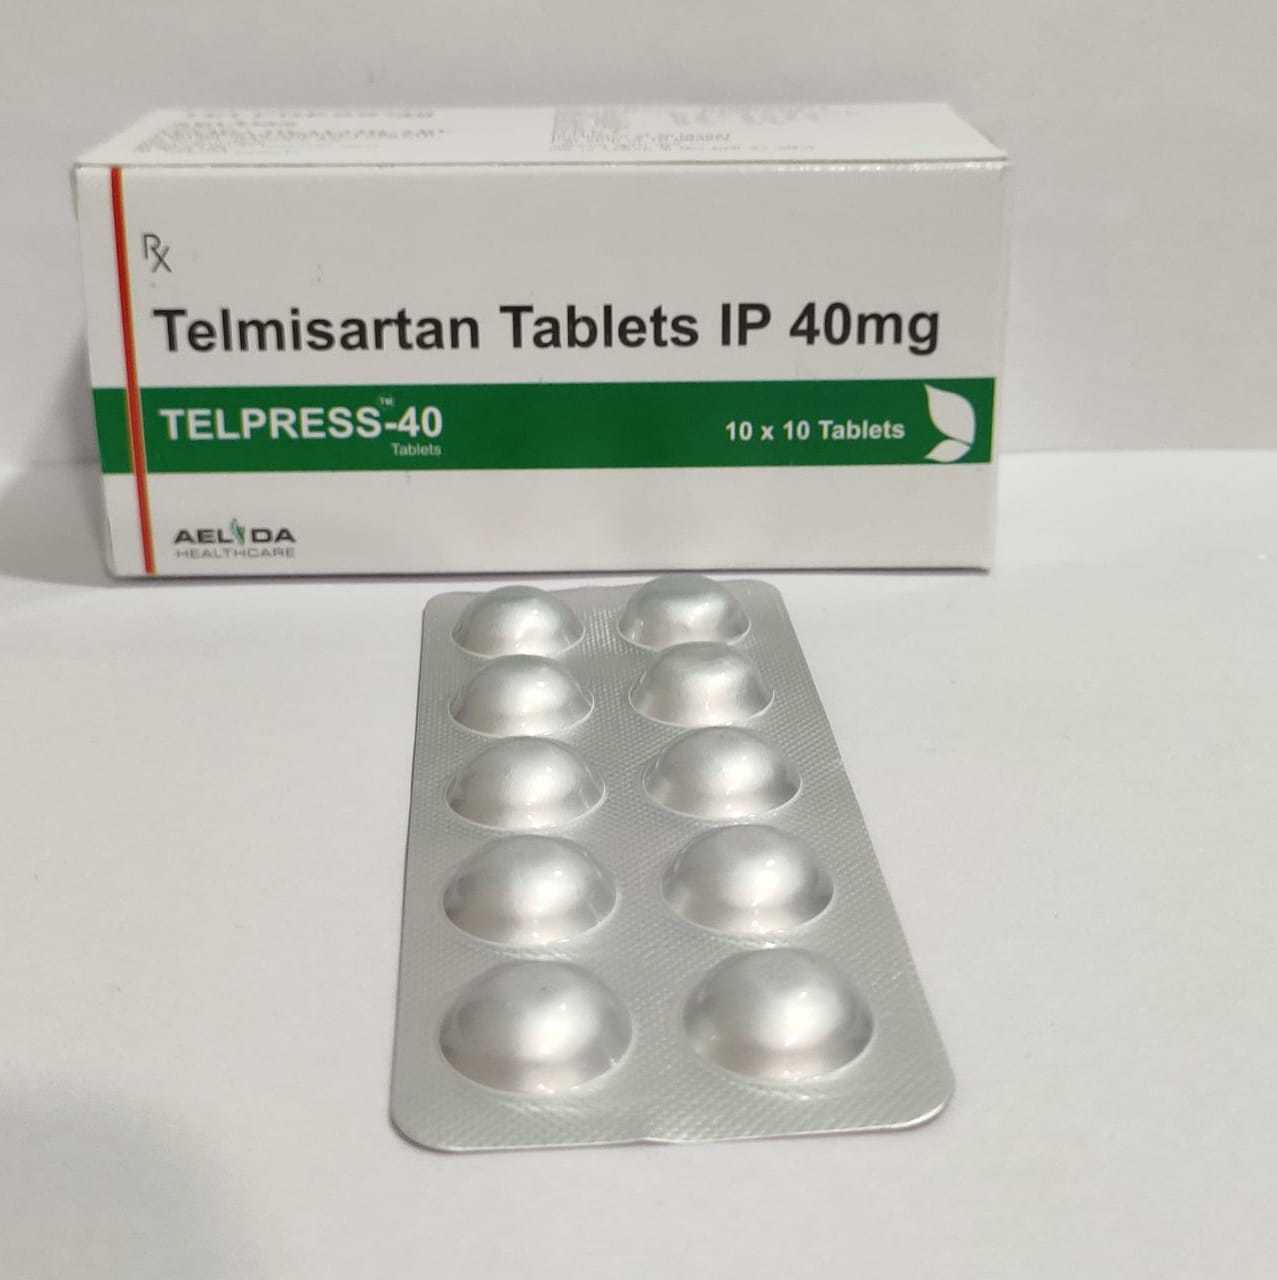 Telmisartan amlodipine tablets